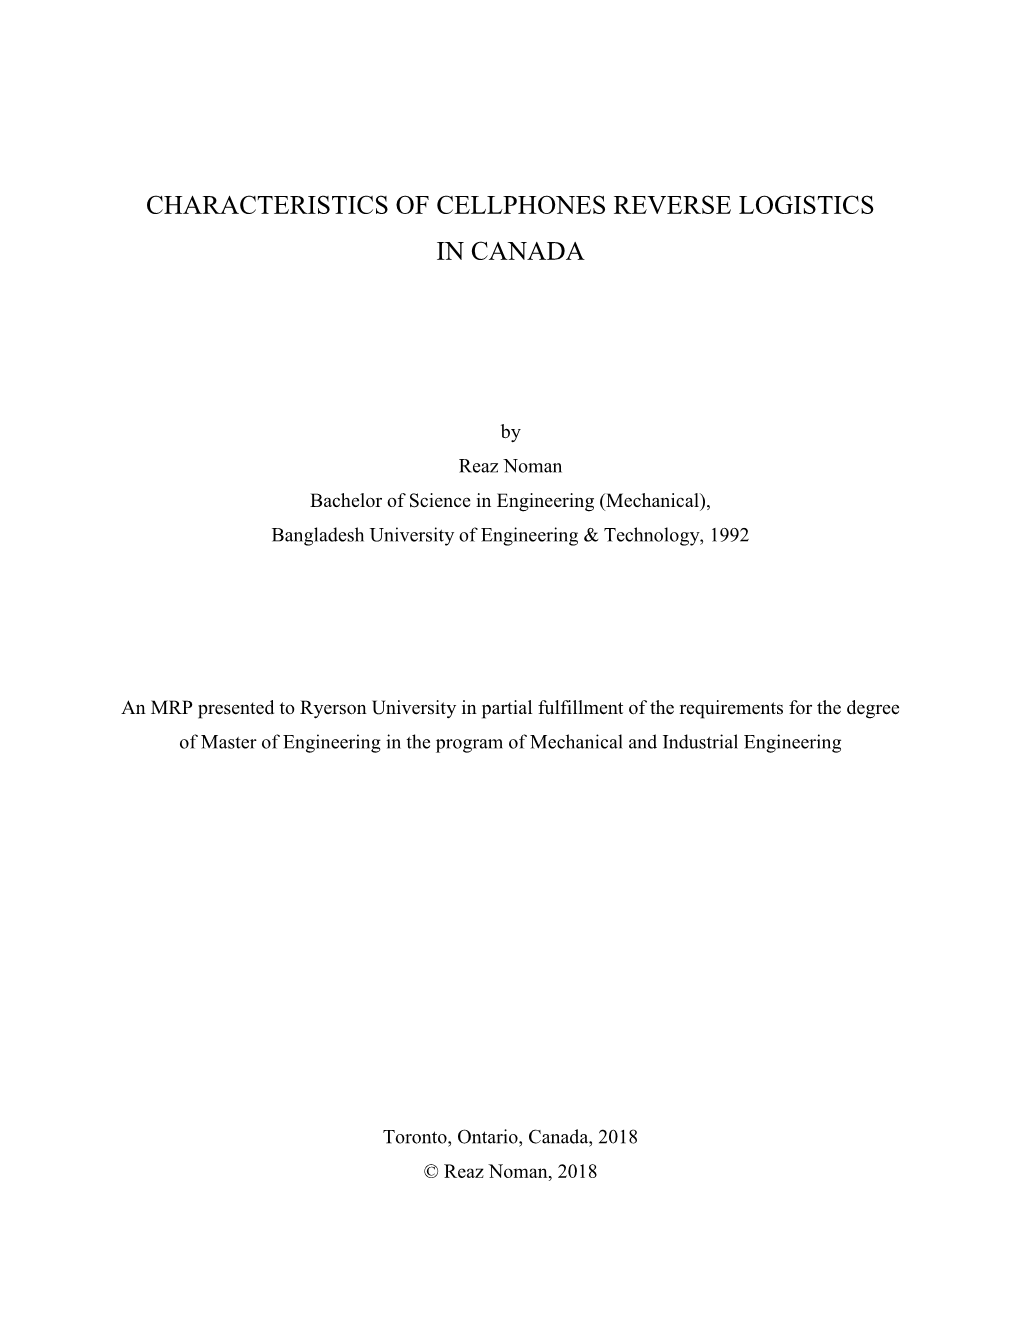 Characteristics of Cellphones Reverse Logistics in Canada